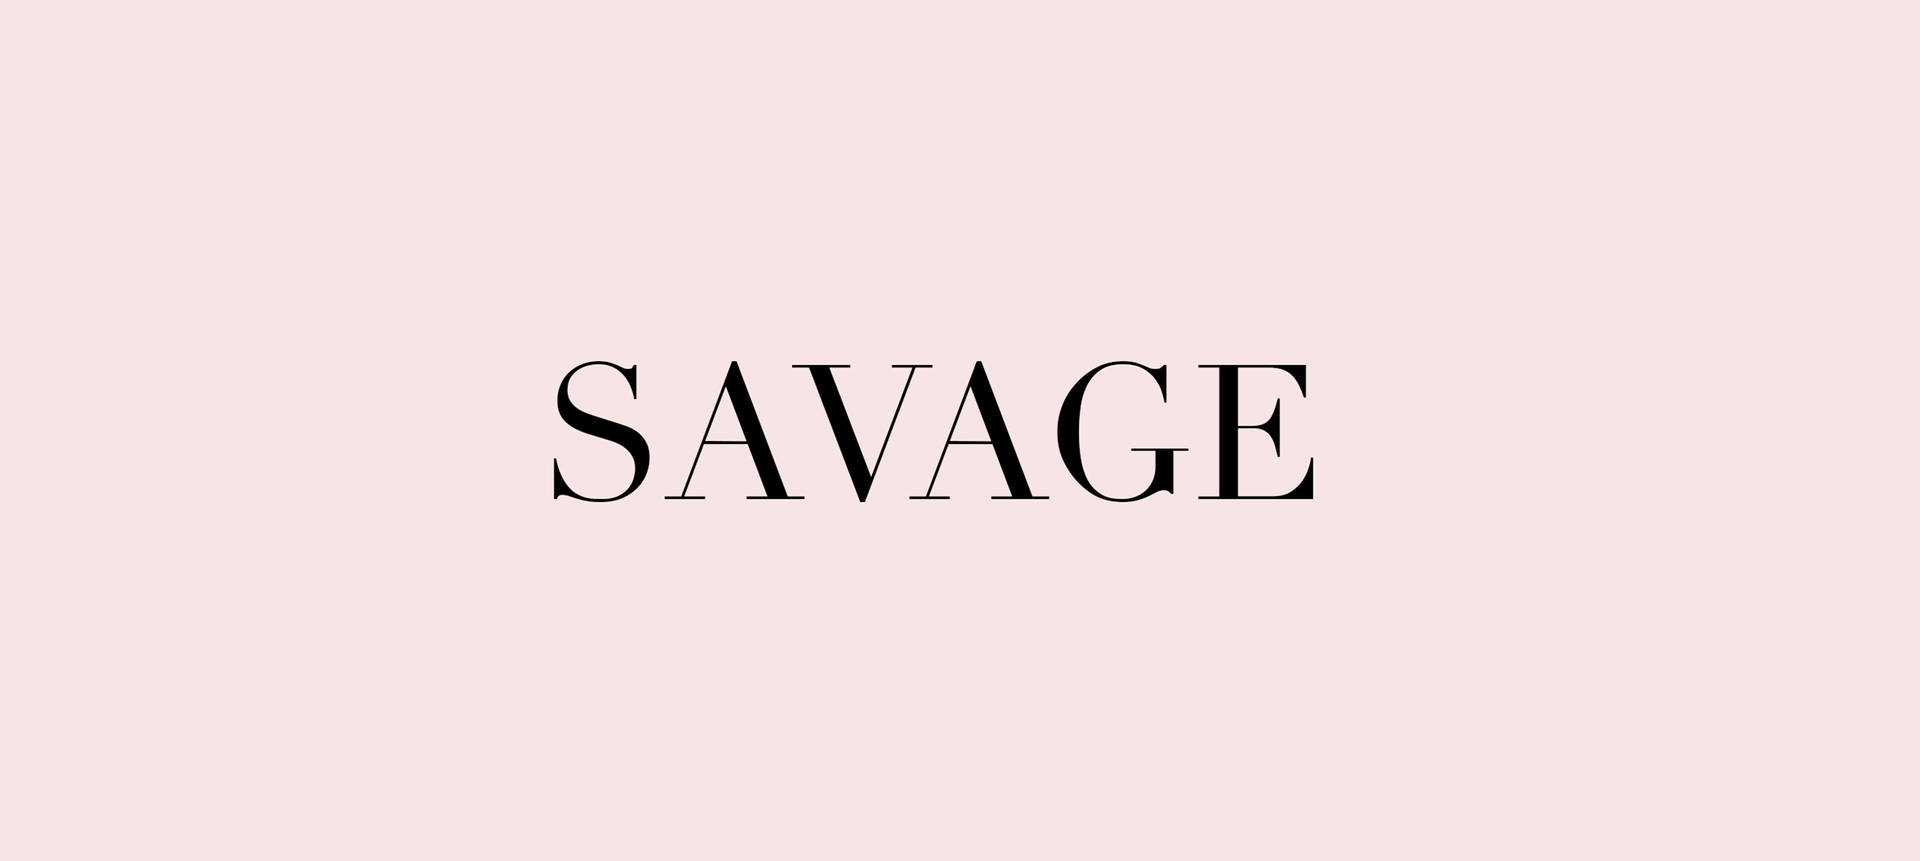 Savage Serif Text On Pink Background Background